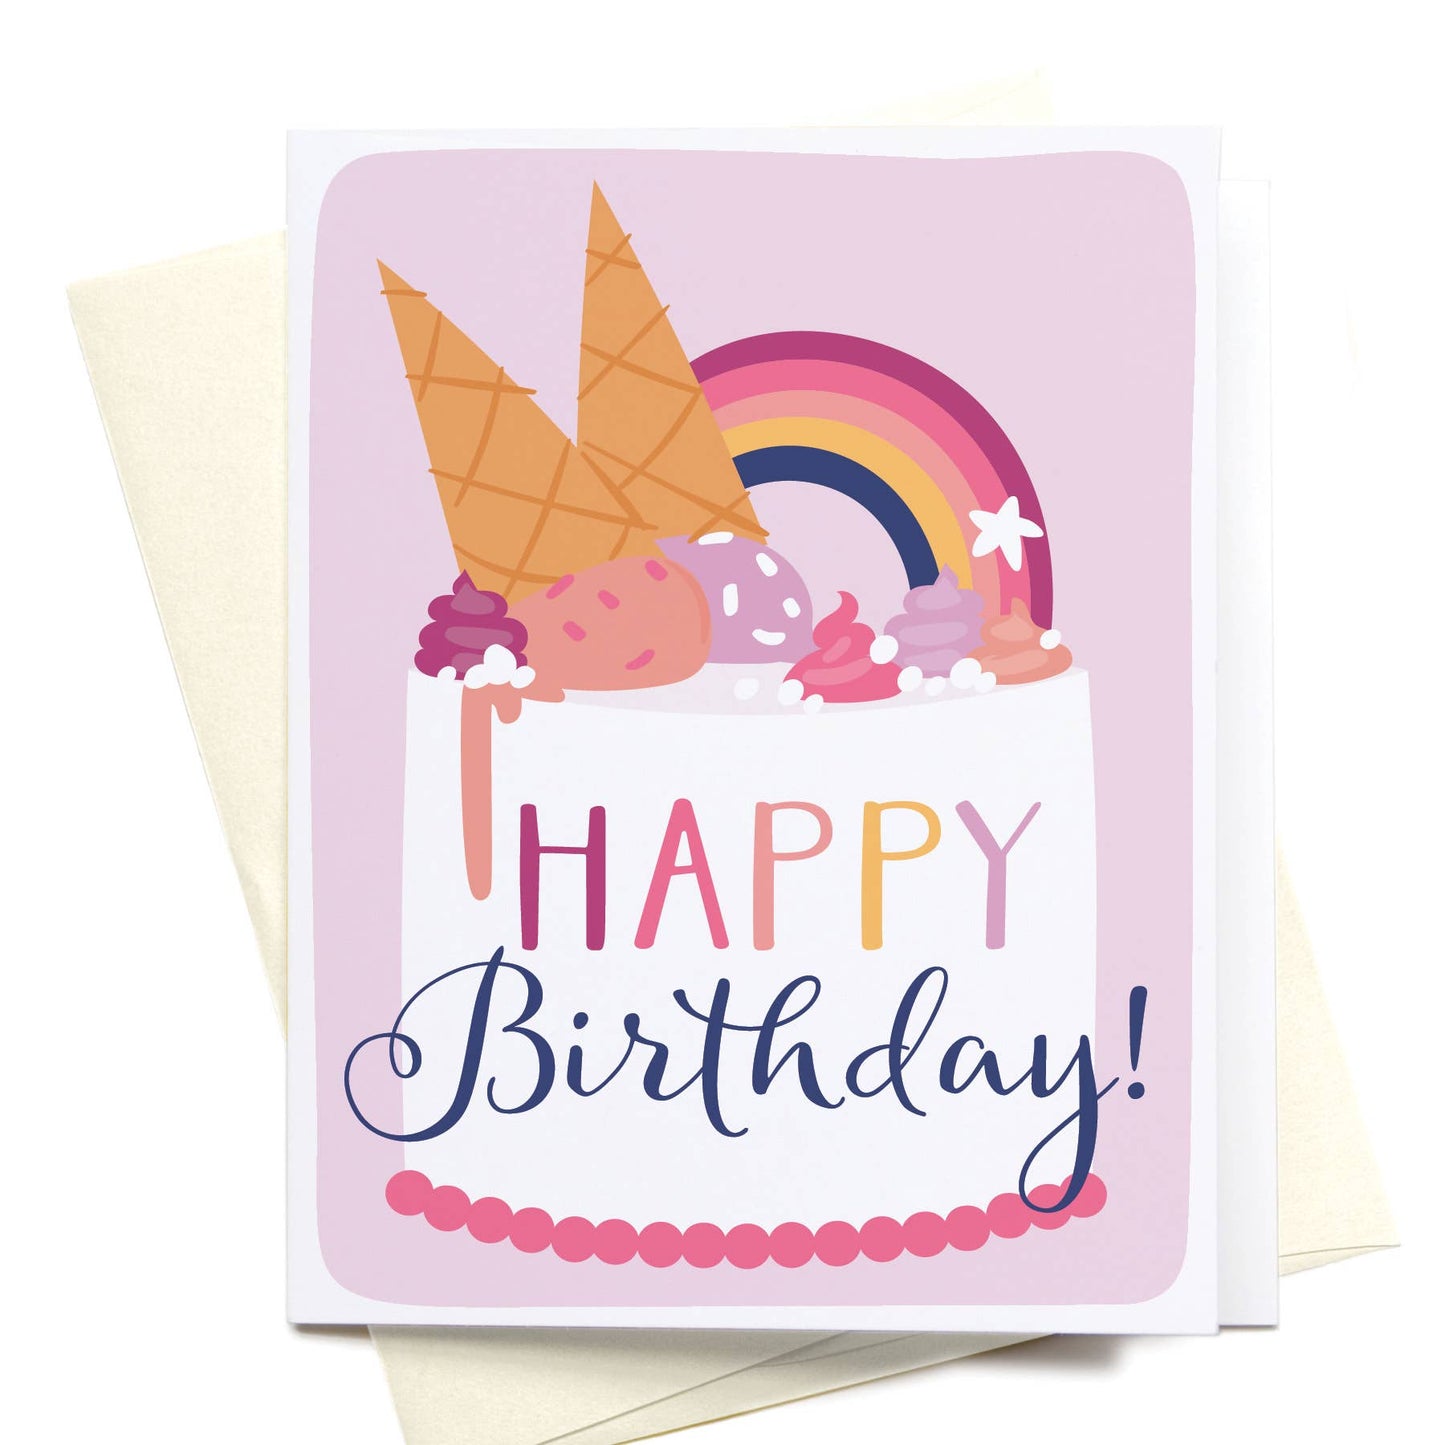 "Happy Birthday" Ice Cream Cake Greeting Card